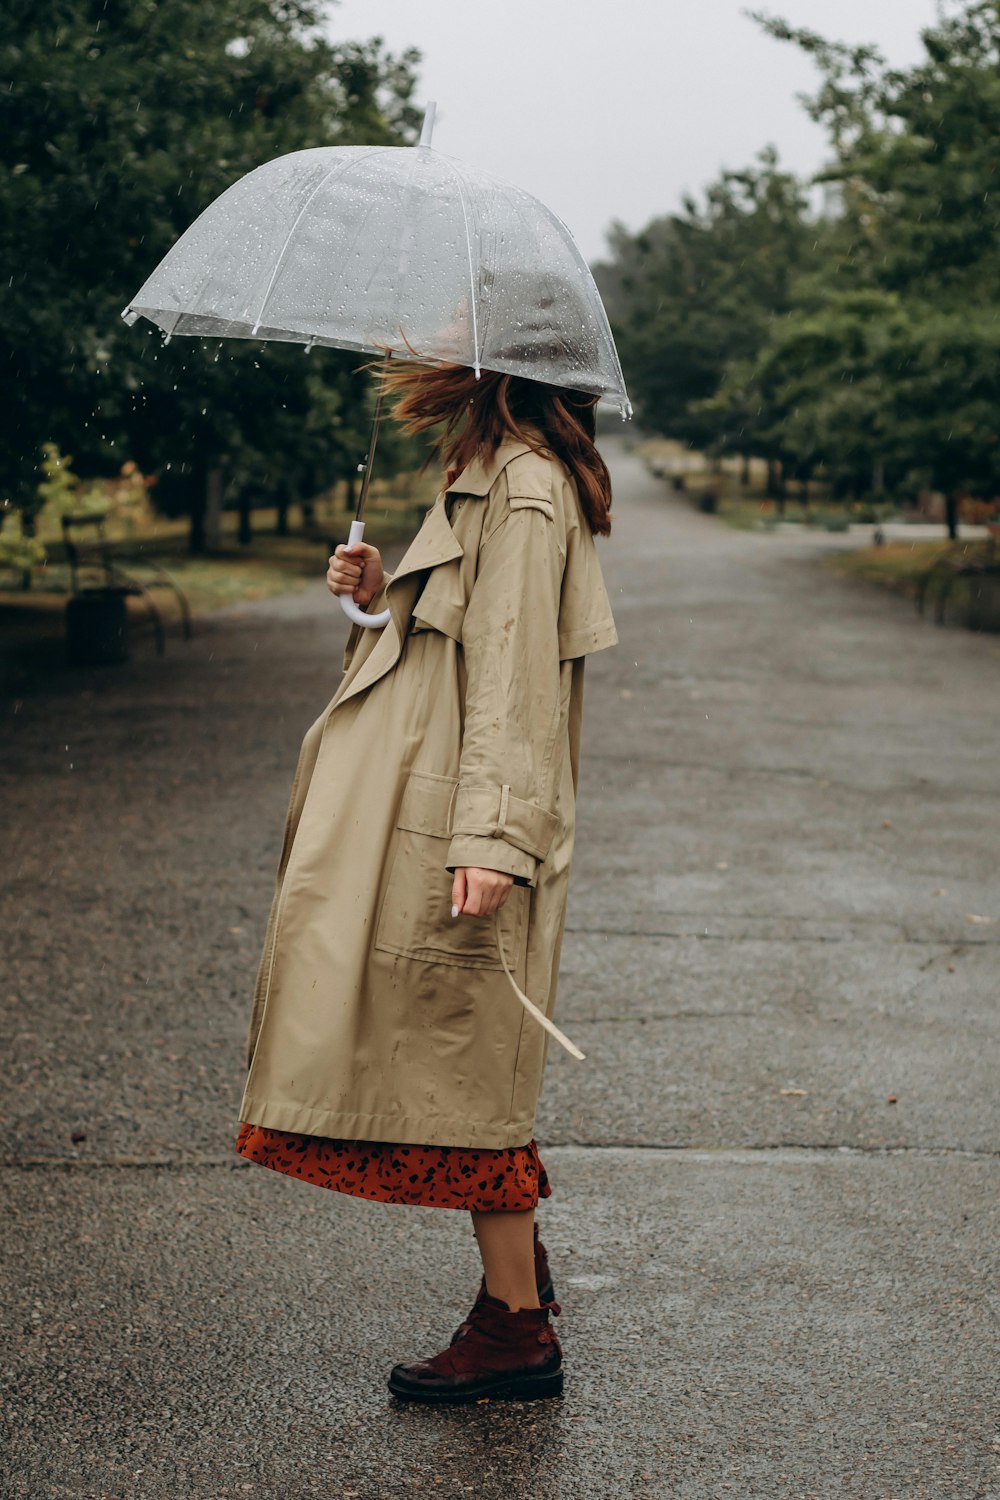 woman in brown coat holding umbrella walking on street during daytime